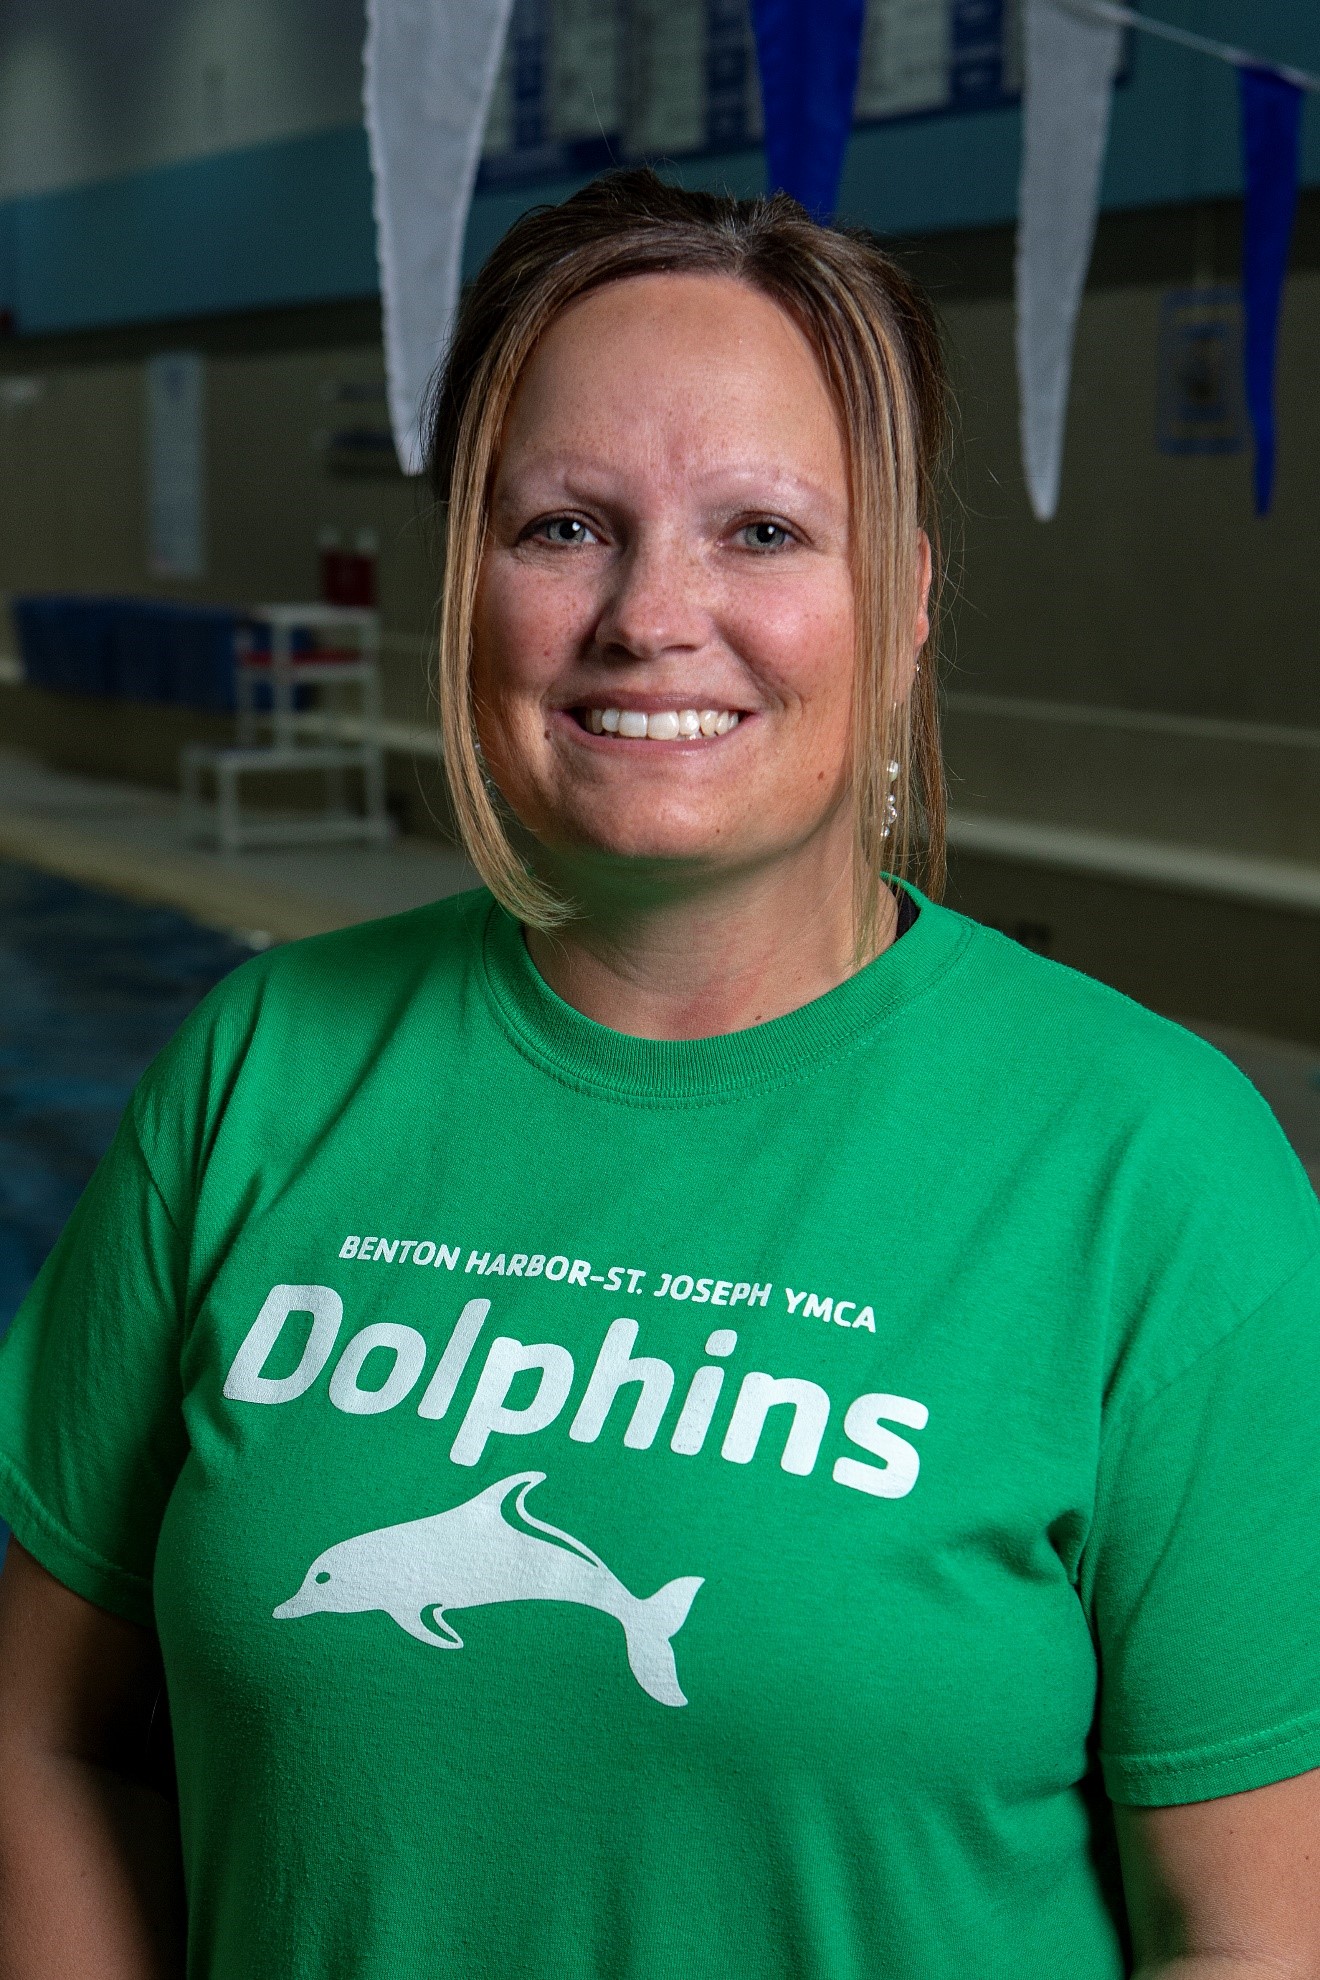 Benton Harbor St. Josephs YMCA Dolphins Meet The Coaches